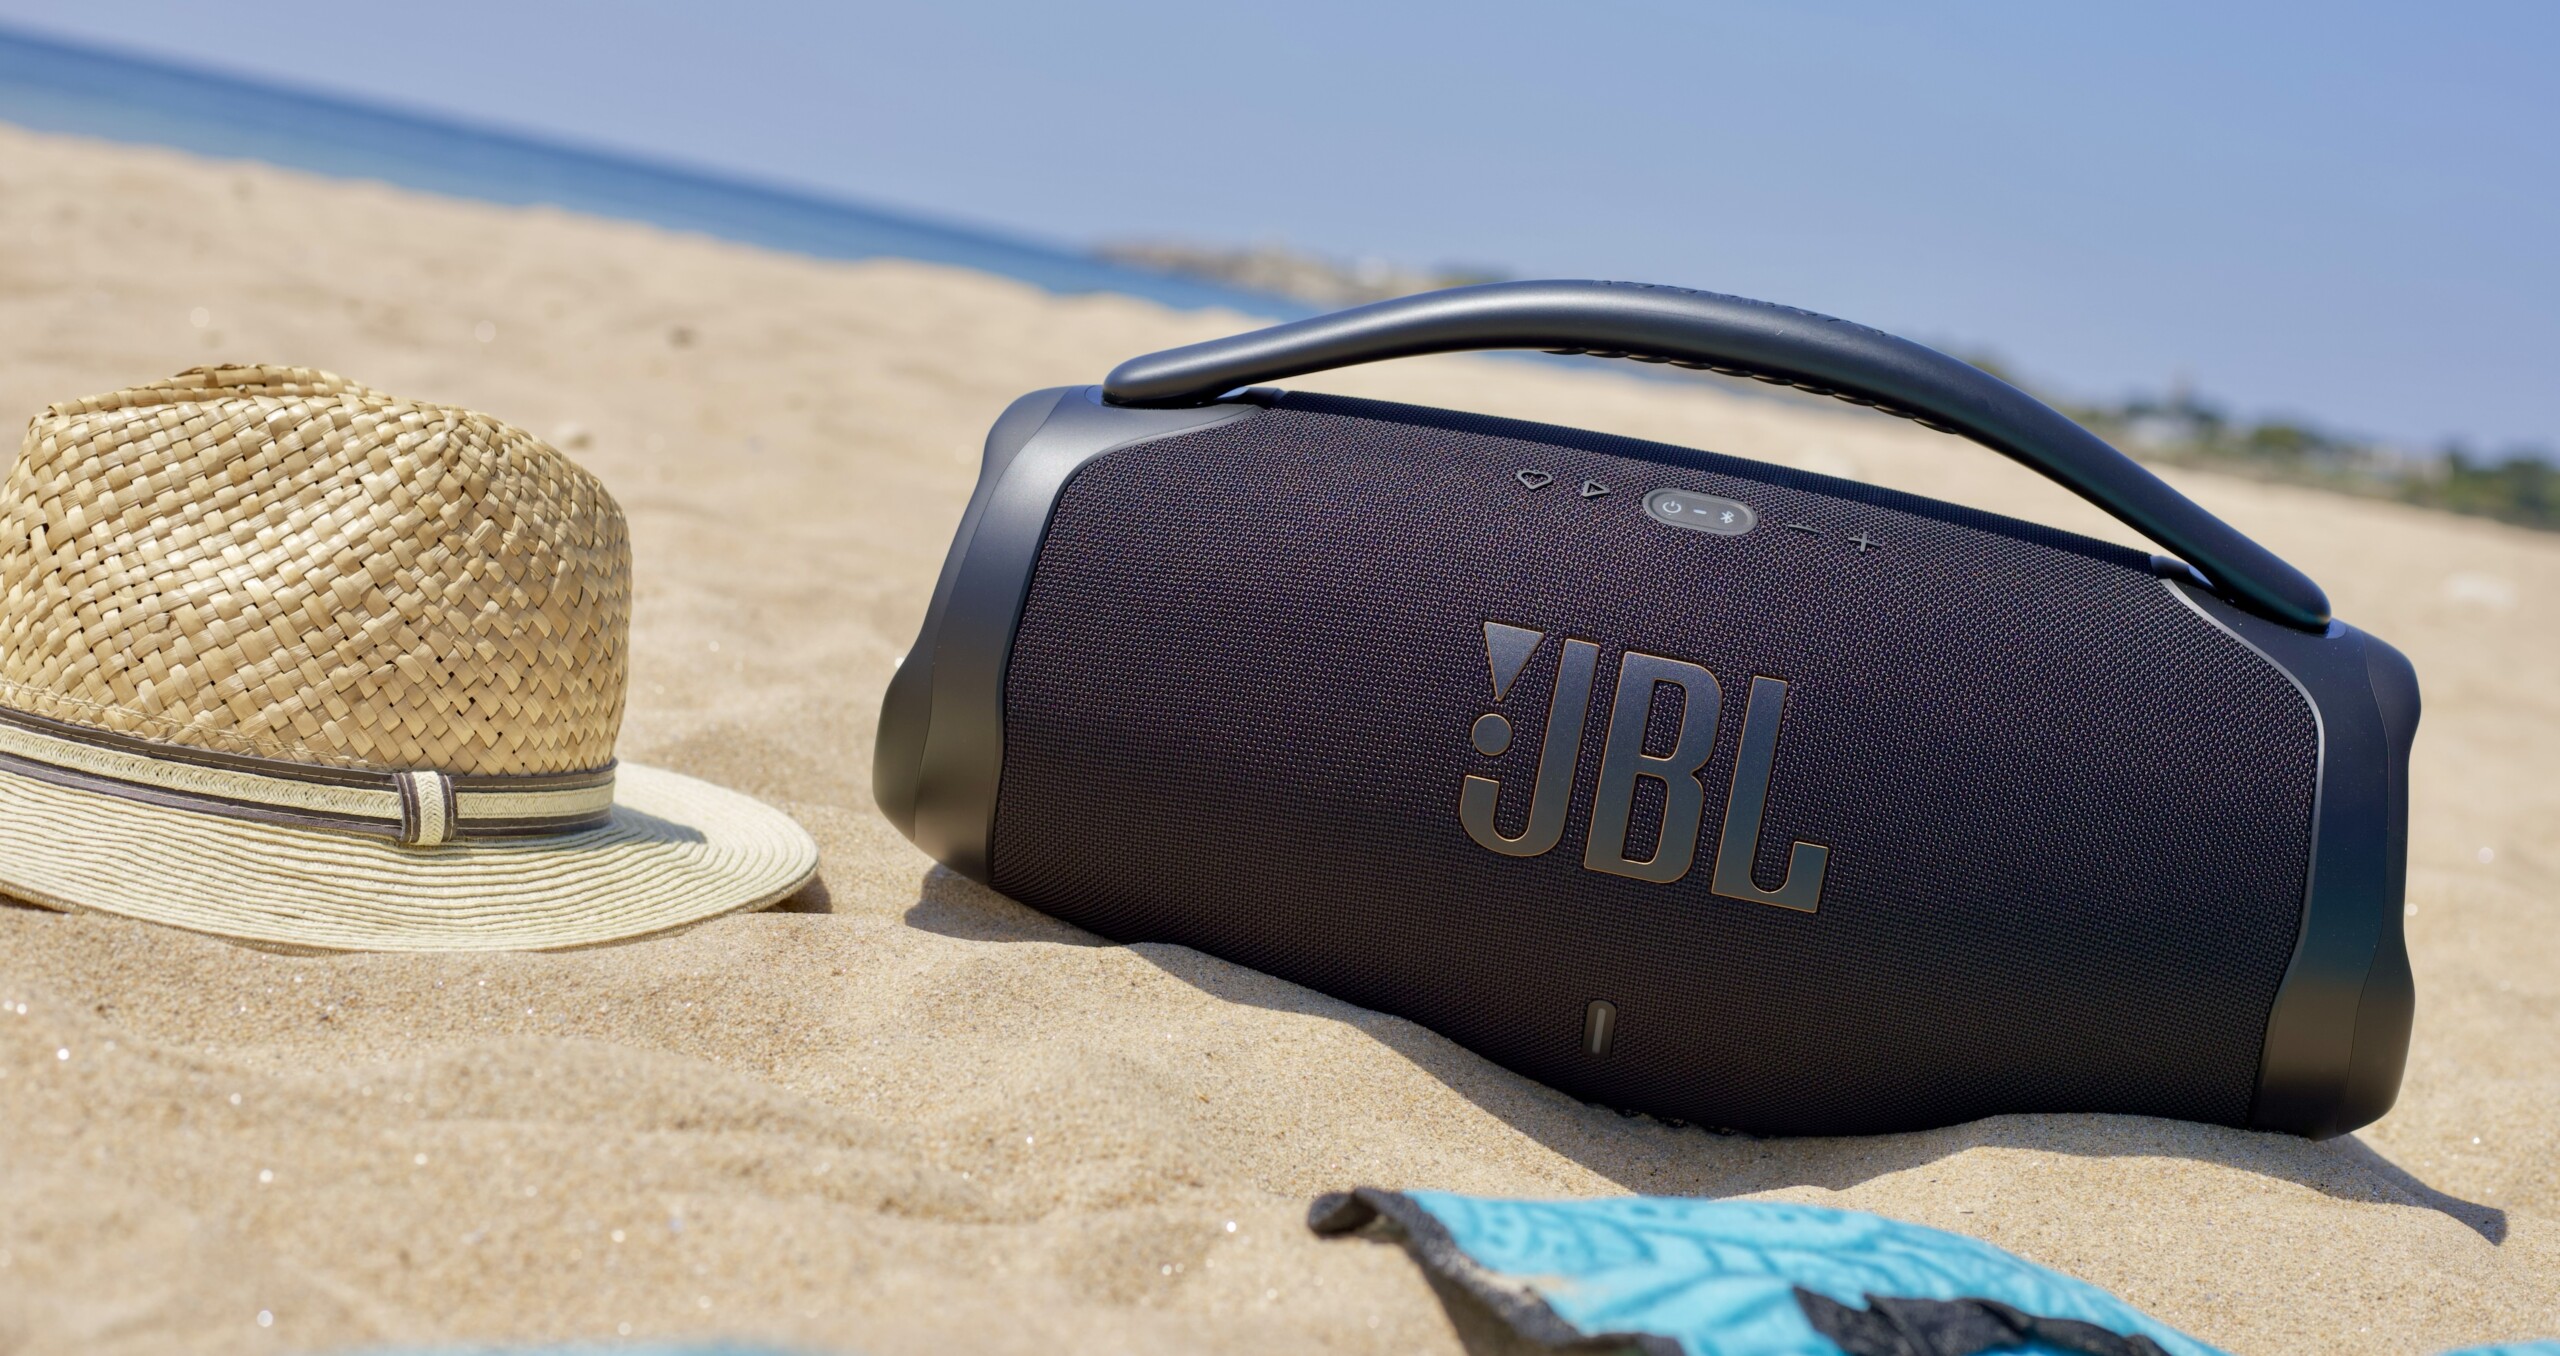 JBL BOOMBOX 2 BLK EU Enceinte portable Bluetooth puissante JBL Boombox 2 -  Noir